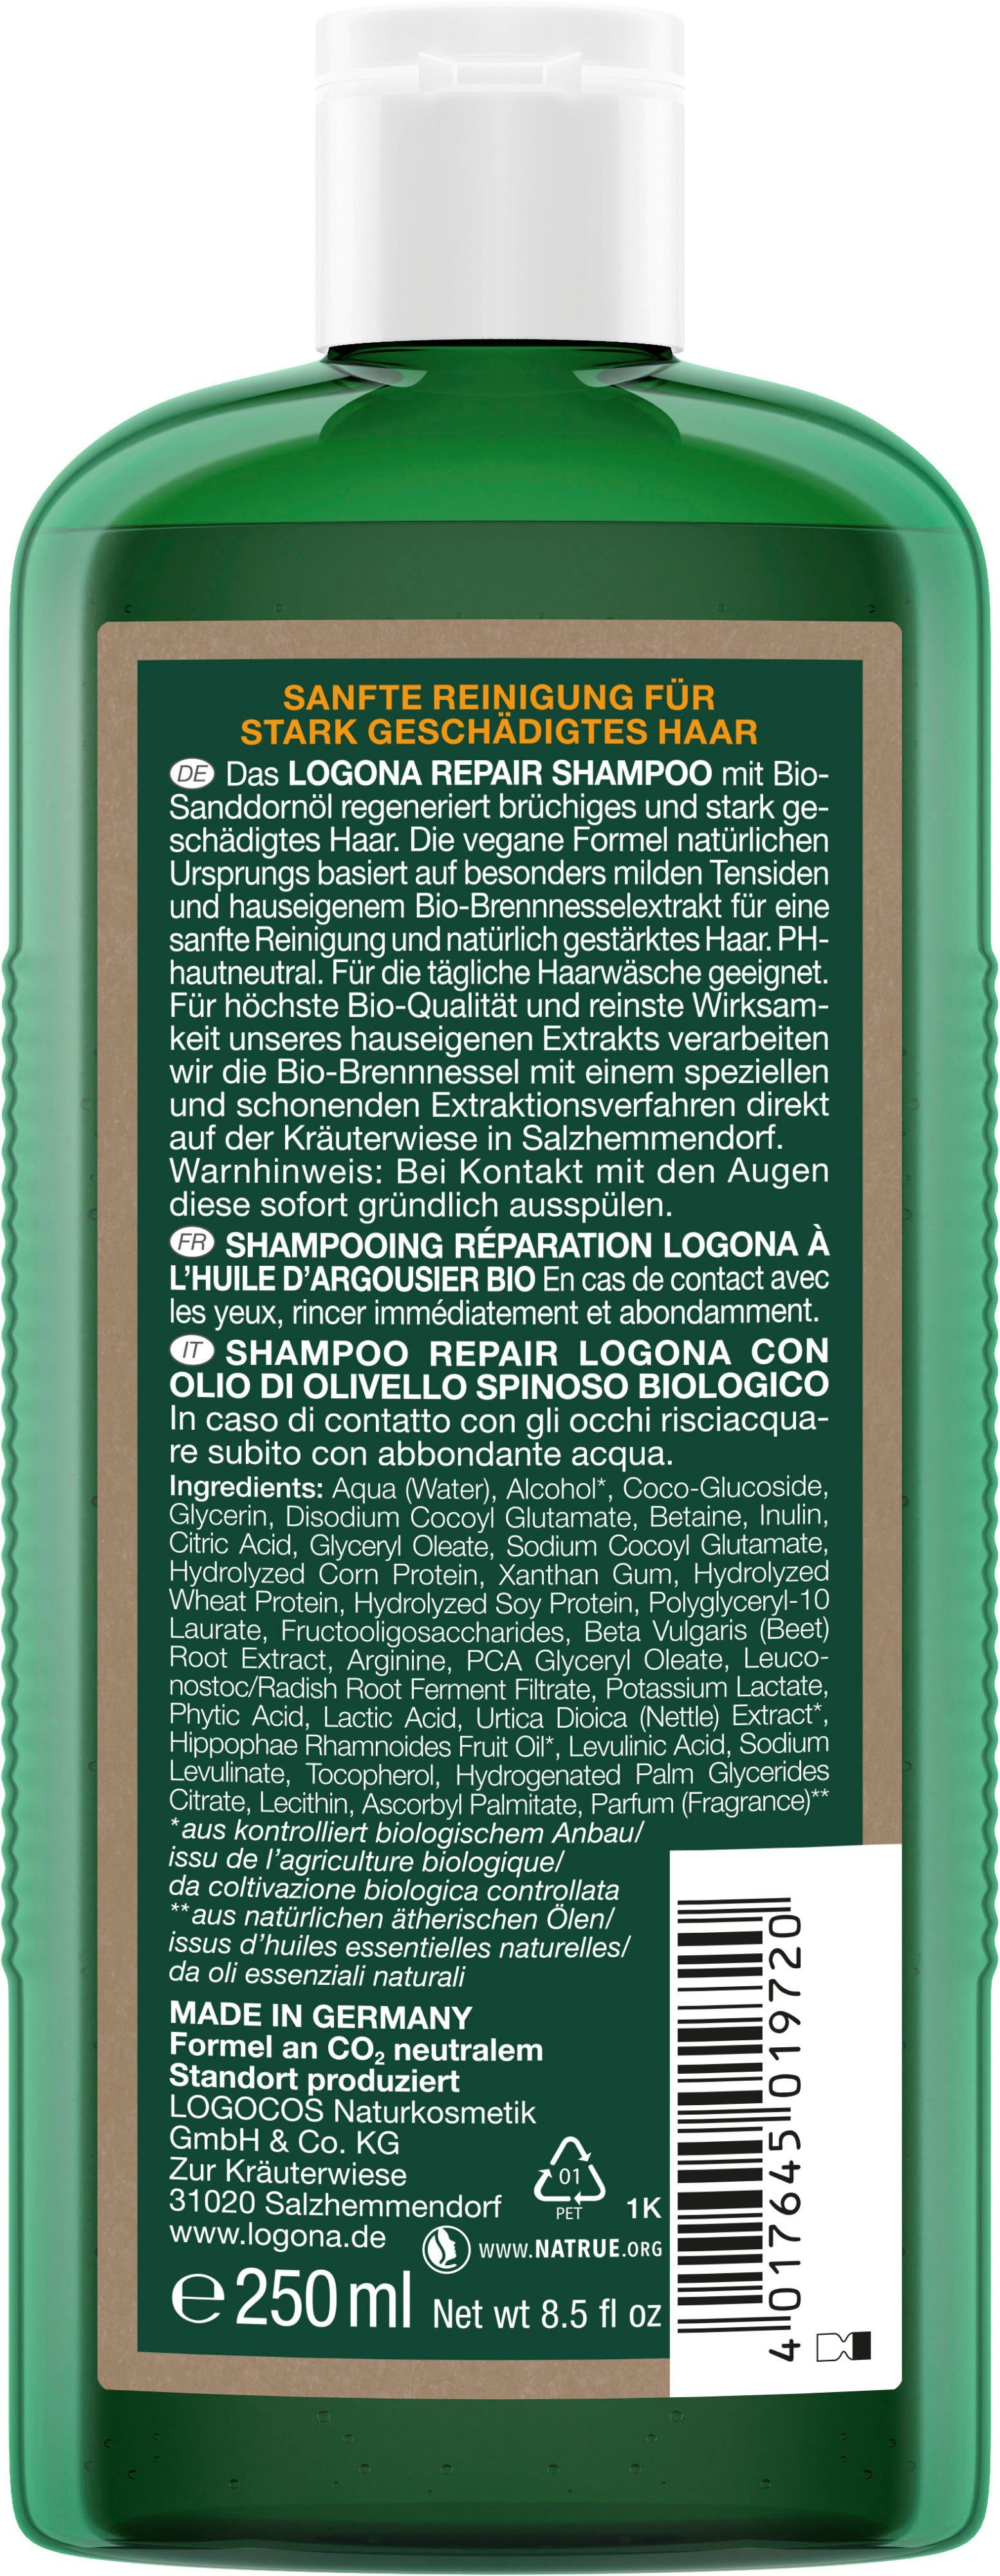 Bio-Sanddorn Logona Repair&Pflege Shampoo Haarshampoo LOGONA